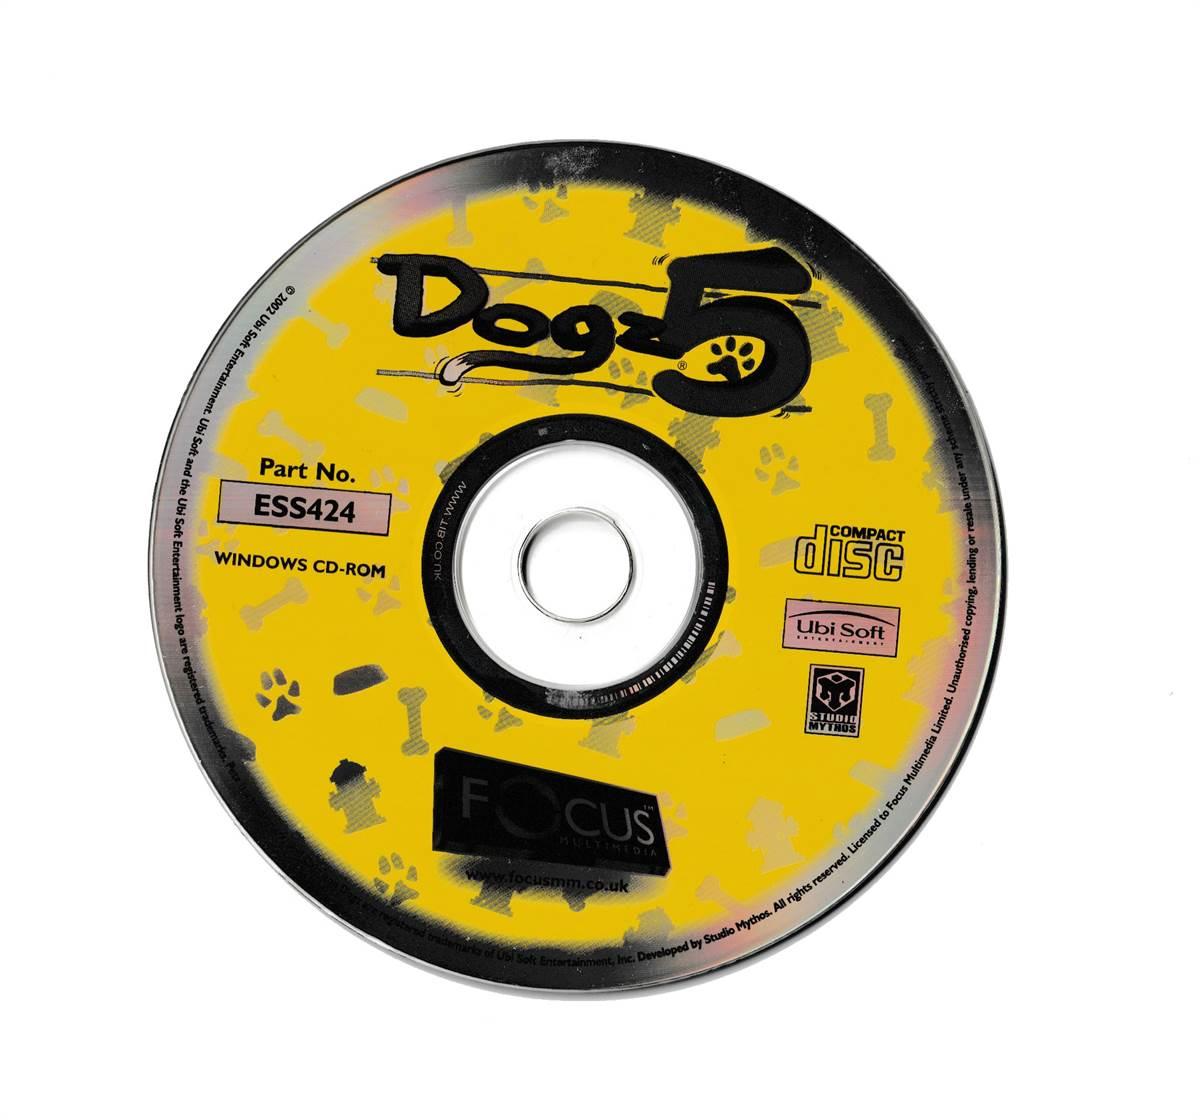 Dogz 5 - Classic Windows PC Game